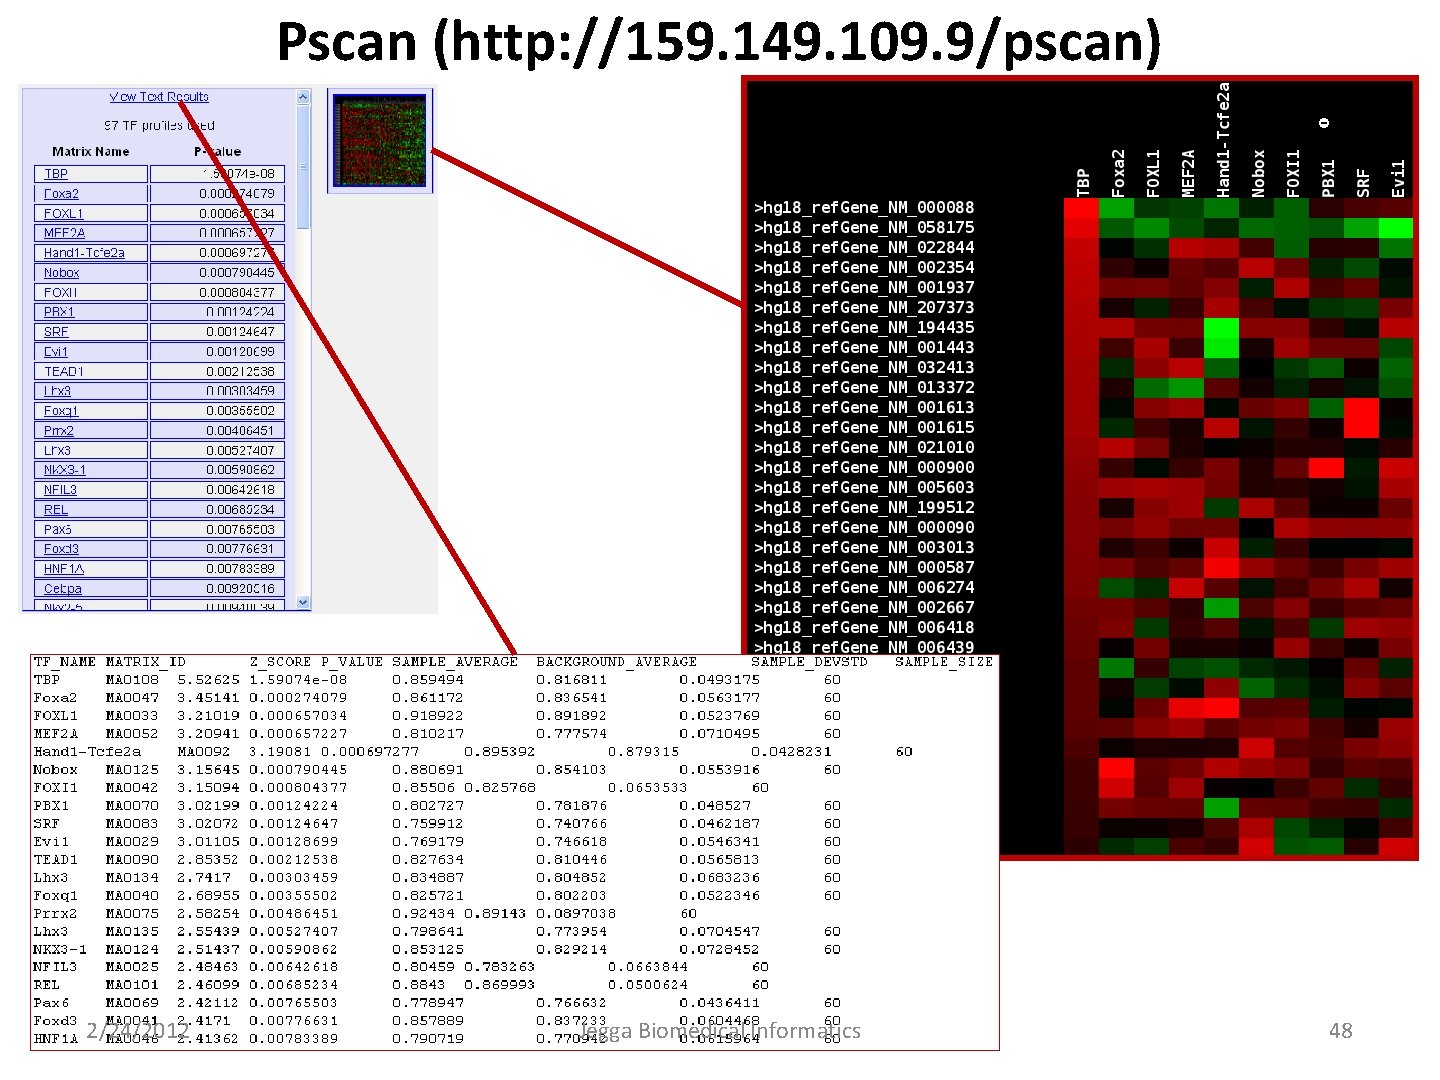 Pscan (http: //159. 149. 109. 9/pscan) 2/24/2012 Jegga Biomedical Informatics 48 